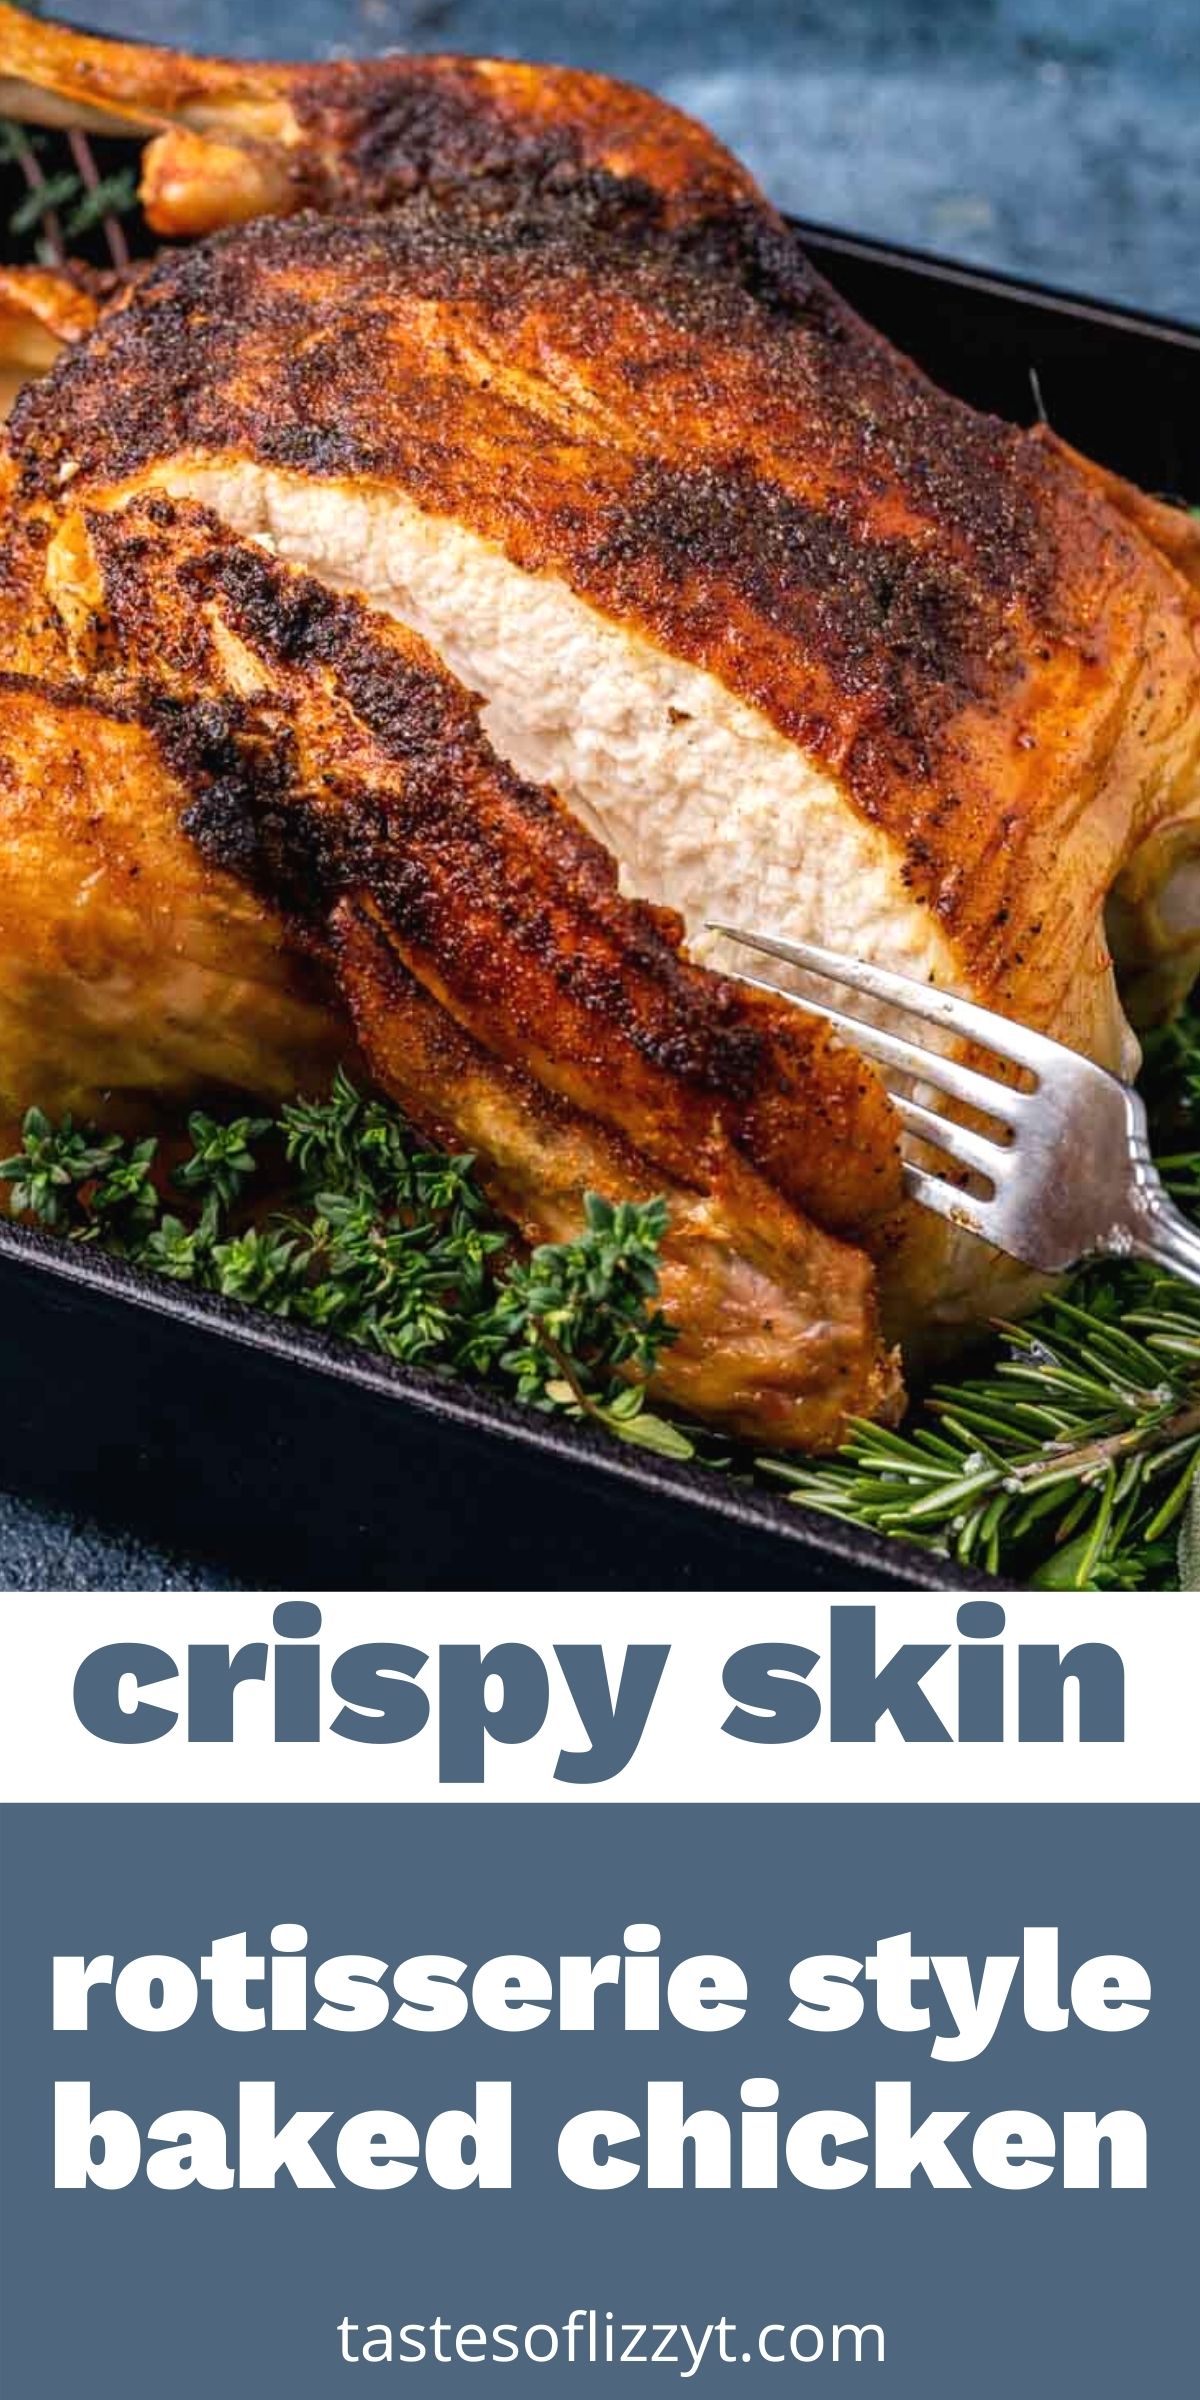 https://www.tastesoflizzyt.com/wp-content/uploads/2022/01/roasted-chicken-pin.jpg